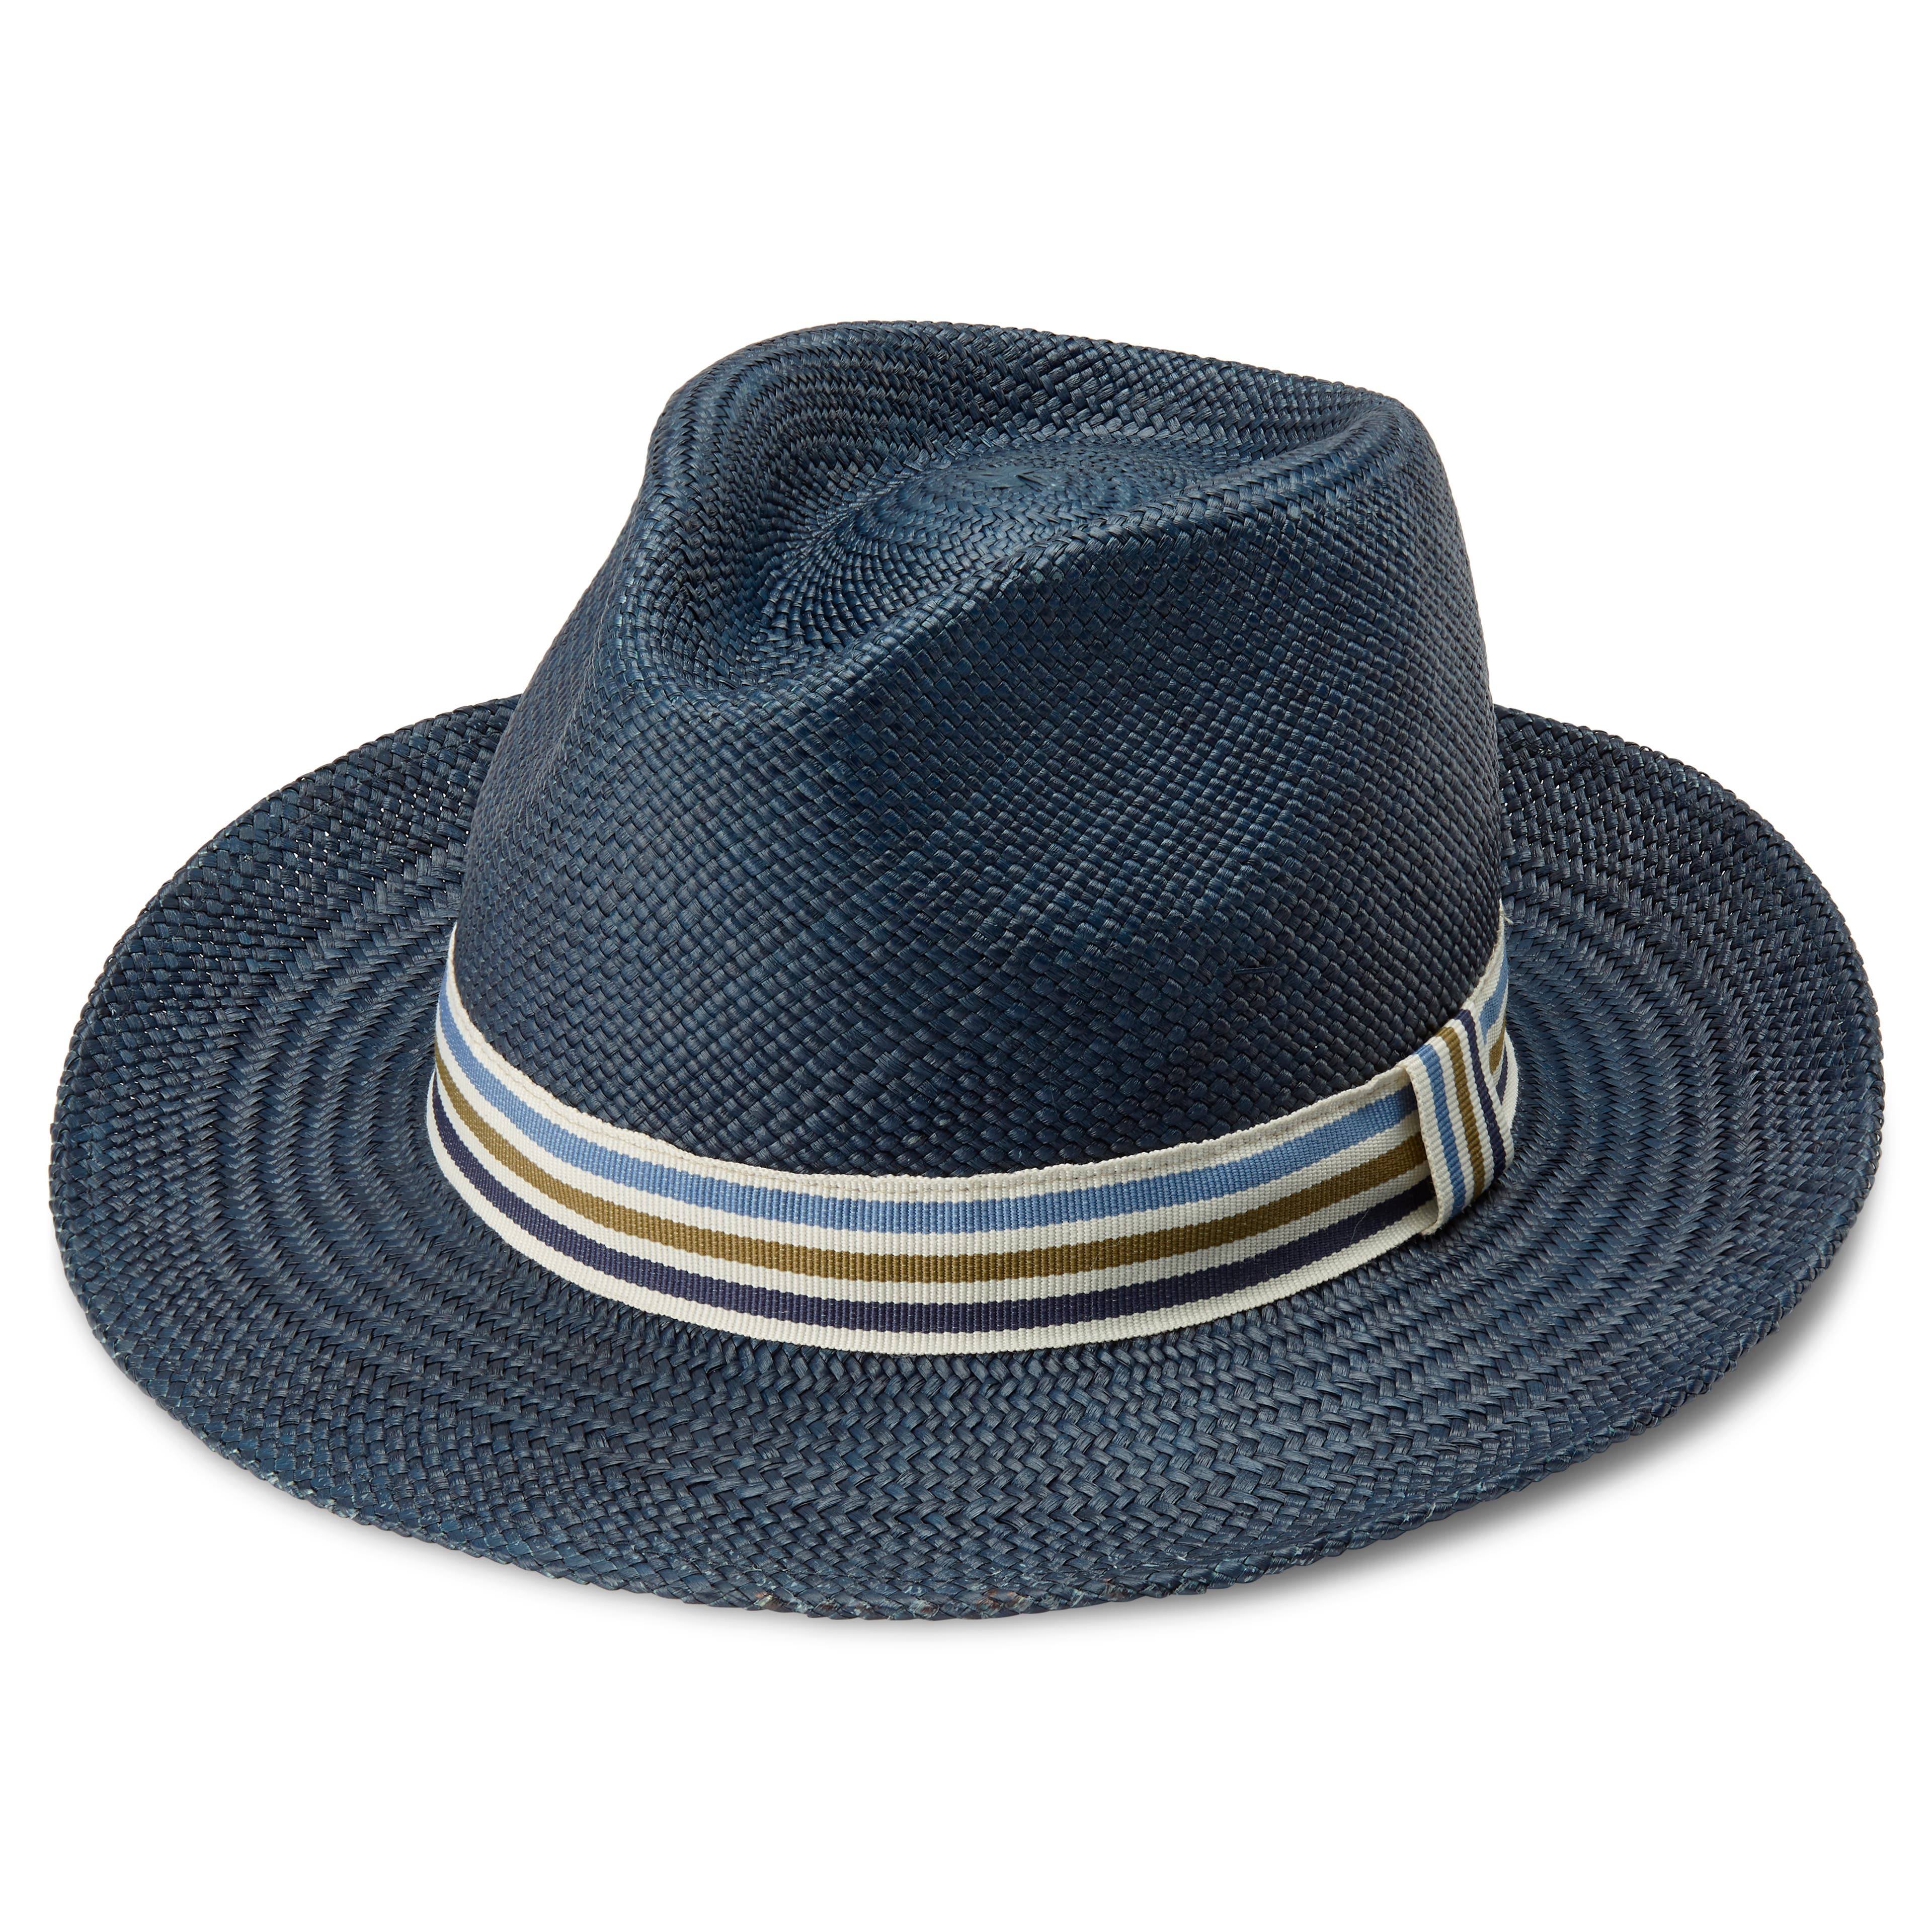 Accessories & jewelry for men - Trendhim.com  Mens dress hats, Beard  styles for men, Classy hats